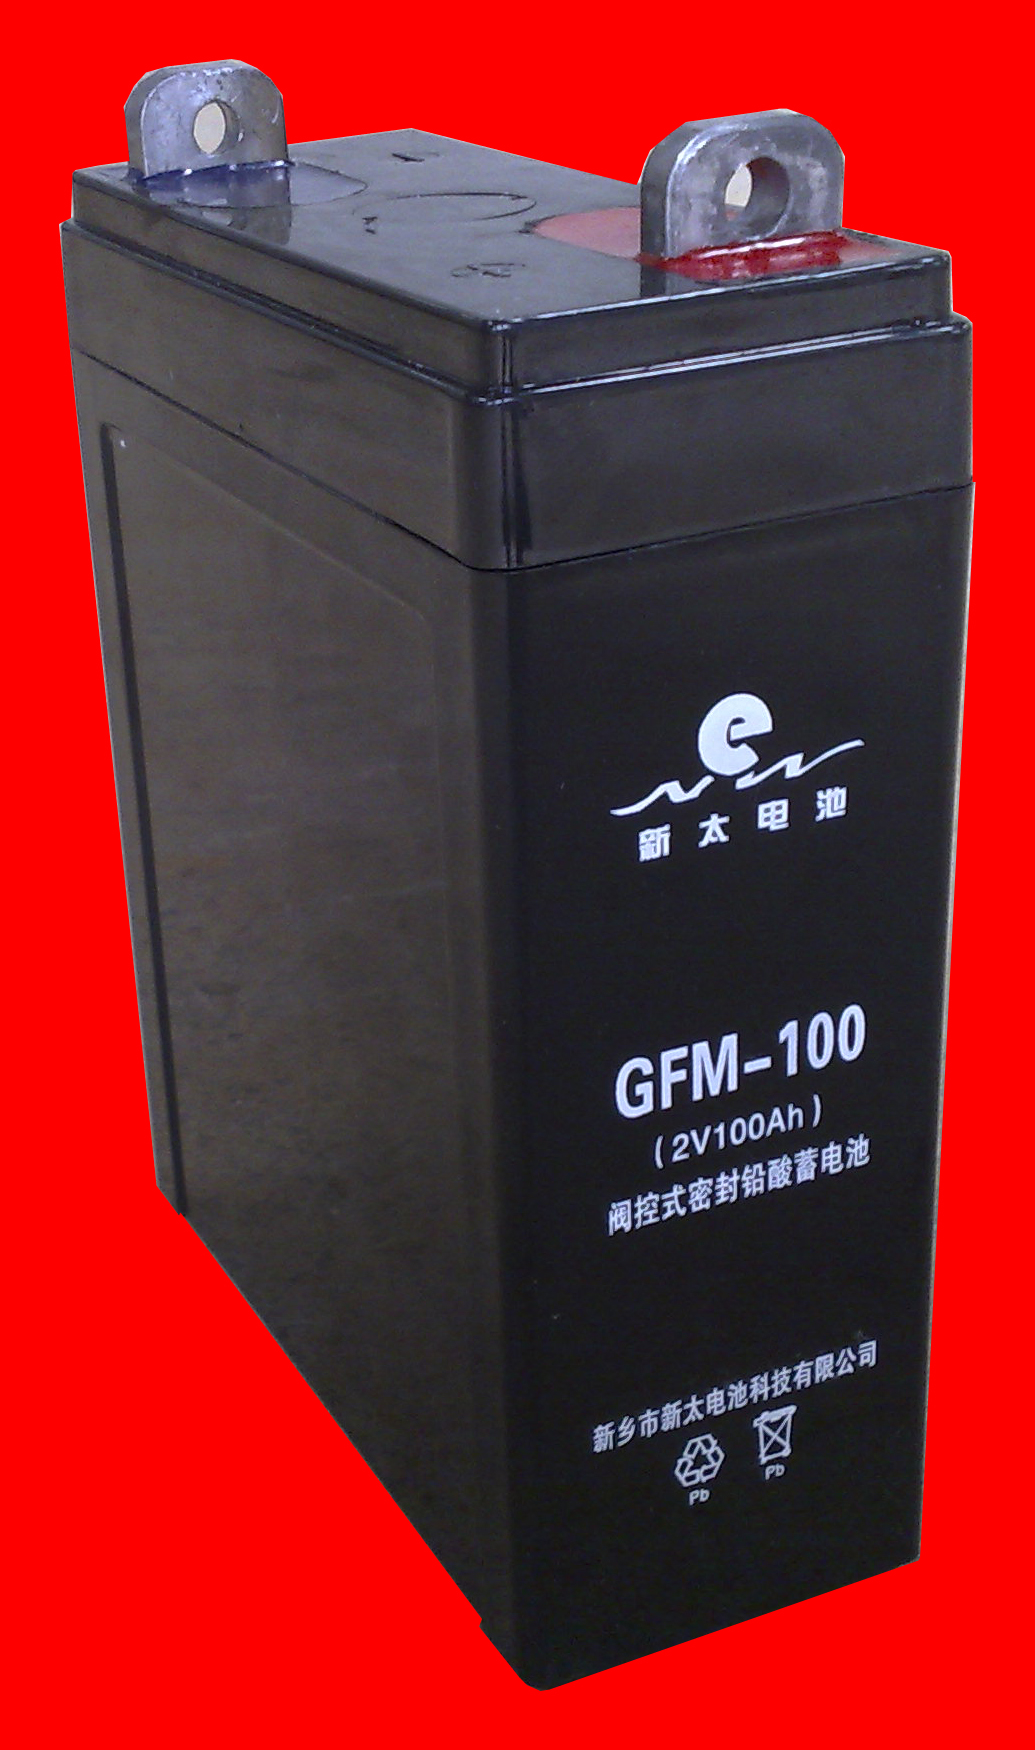 GFM-100(2V100Ah)固定型閥控式密封鉛酸蓄電池